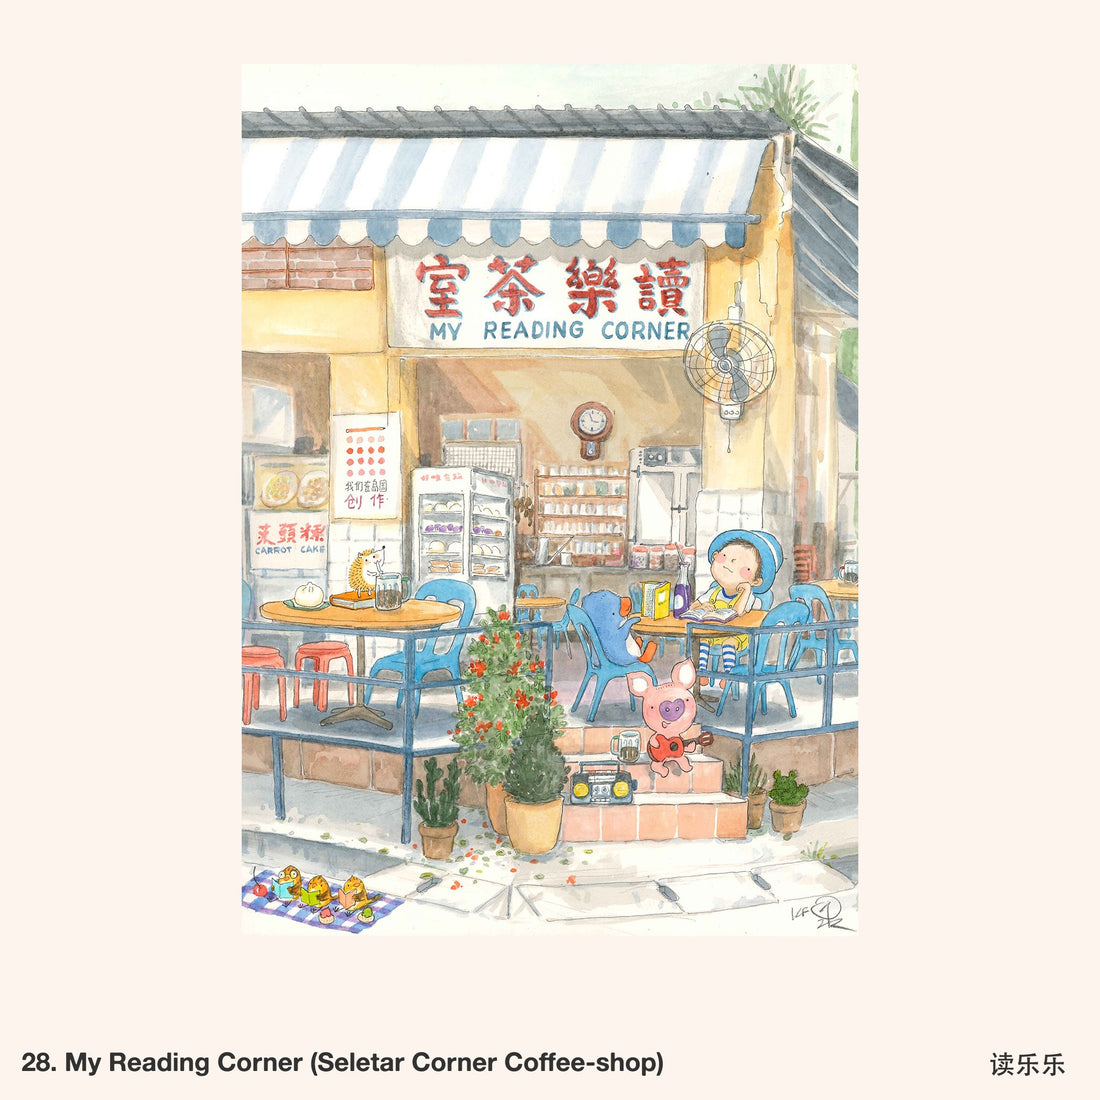 28. My Reading Corner (Seletar Corner Coffee-shop) Artwork